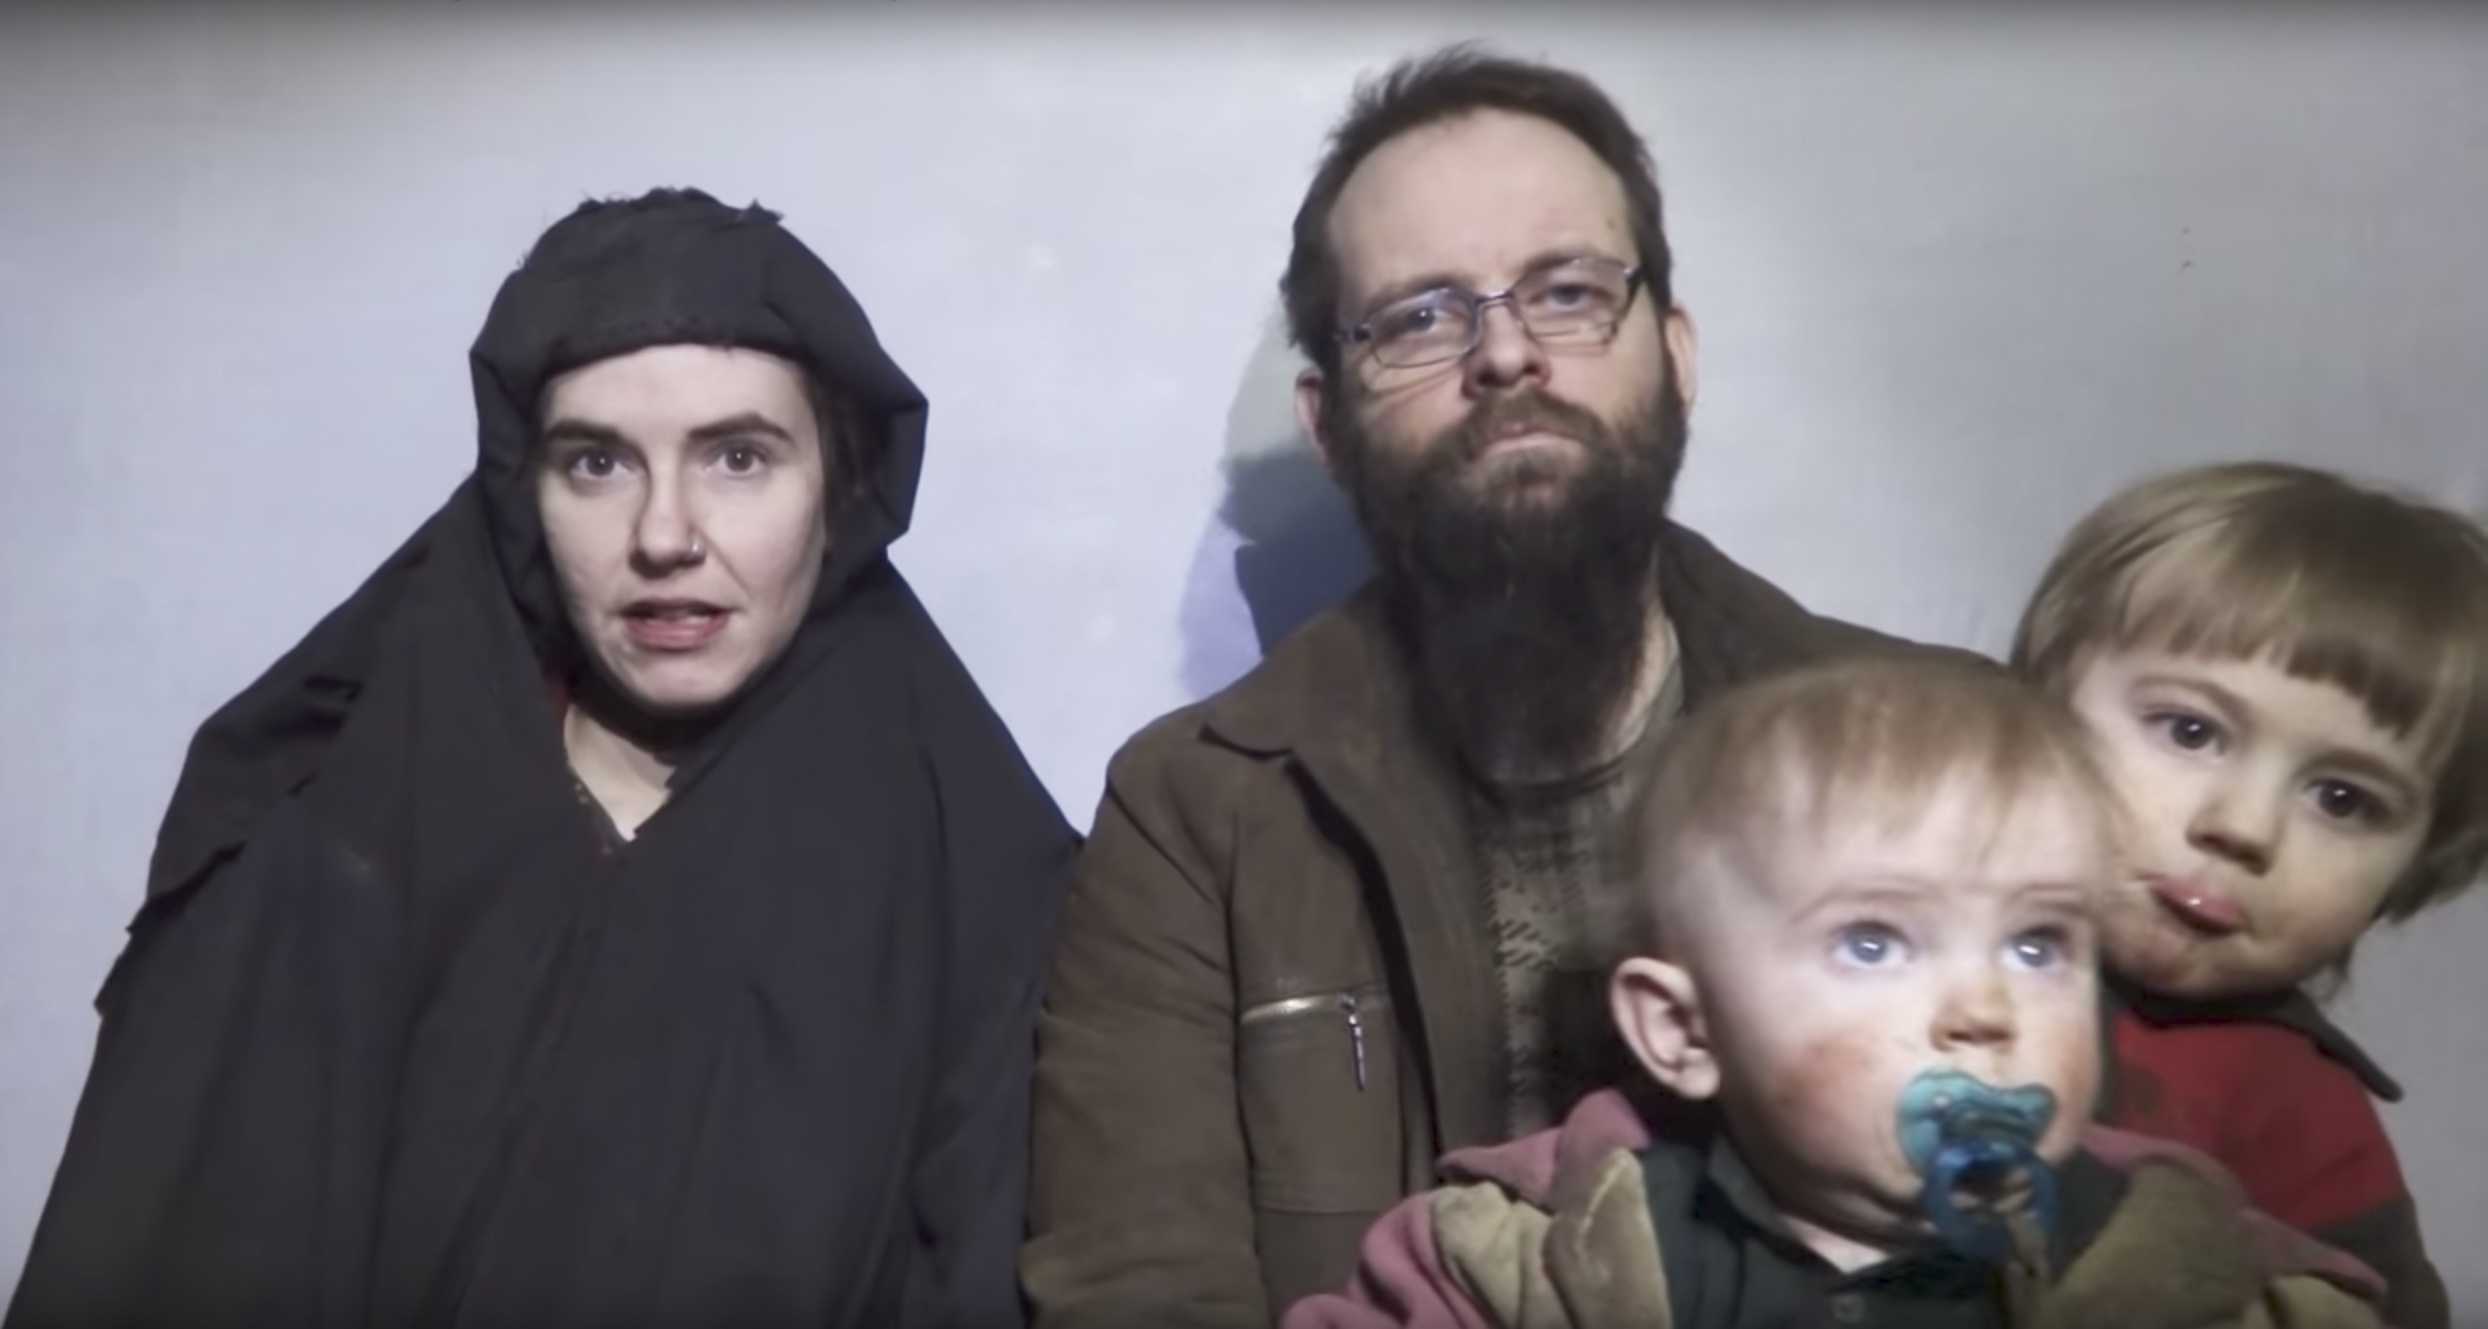 Freed Taliban hostage says captors raped his wife, authorized child's killing